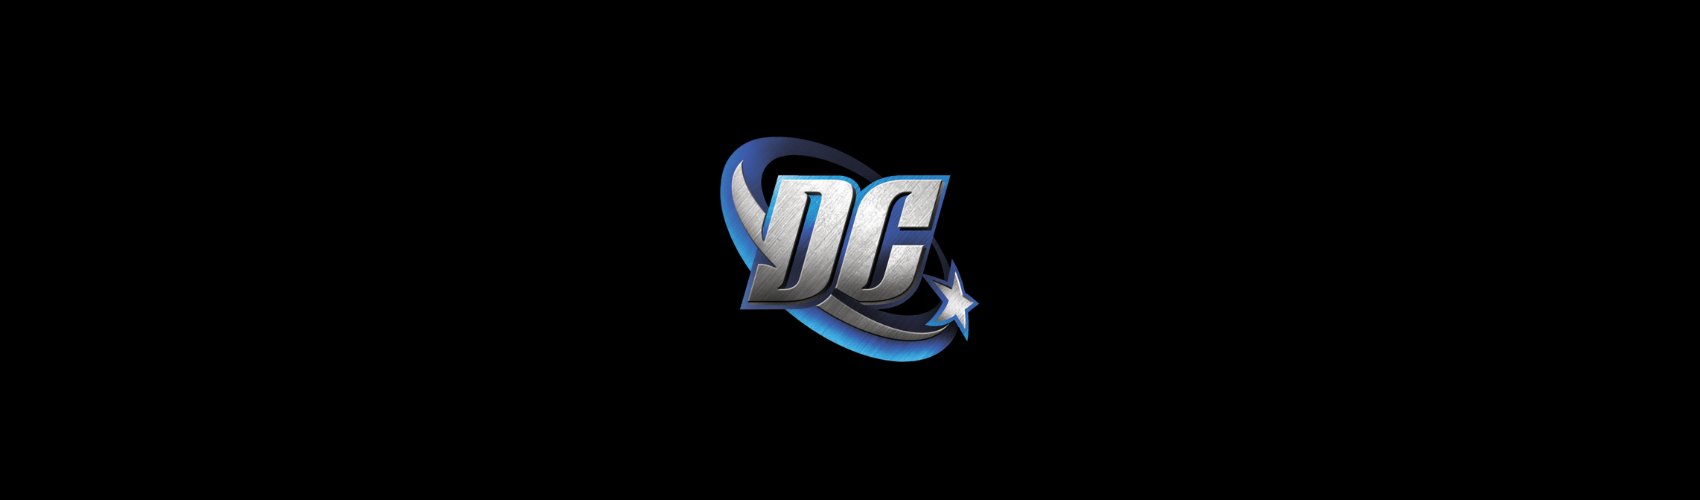 DC- Video Games